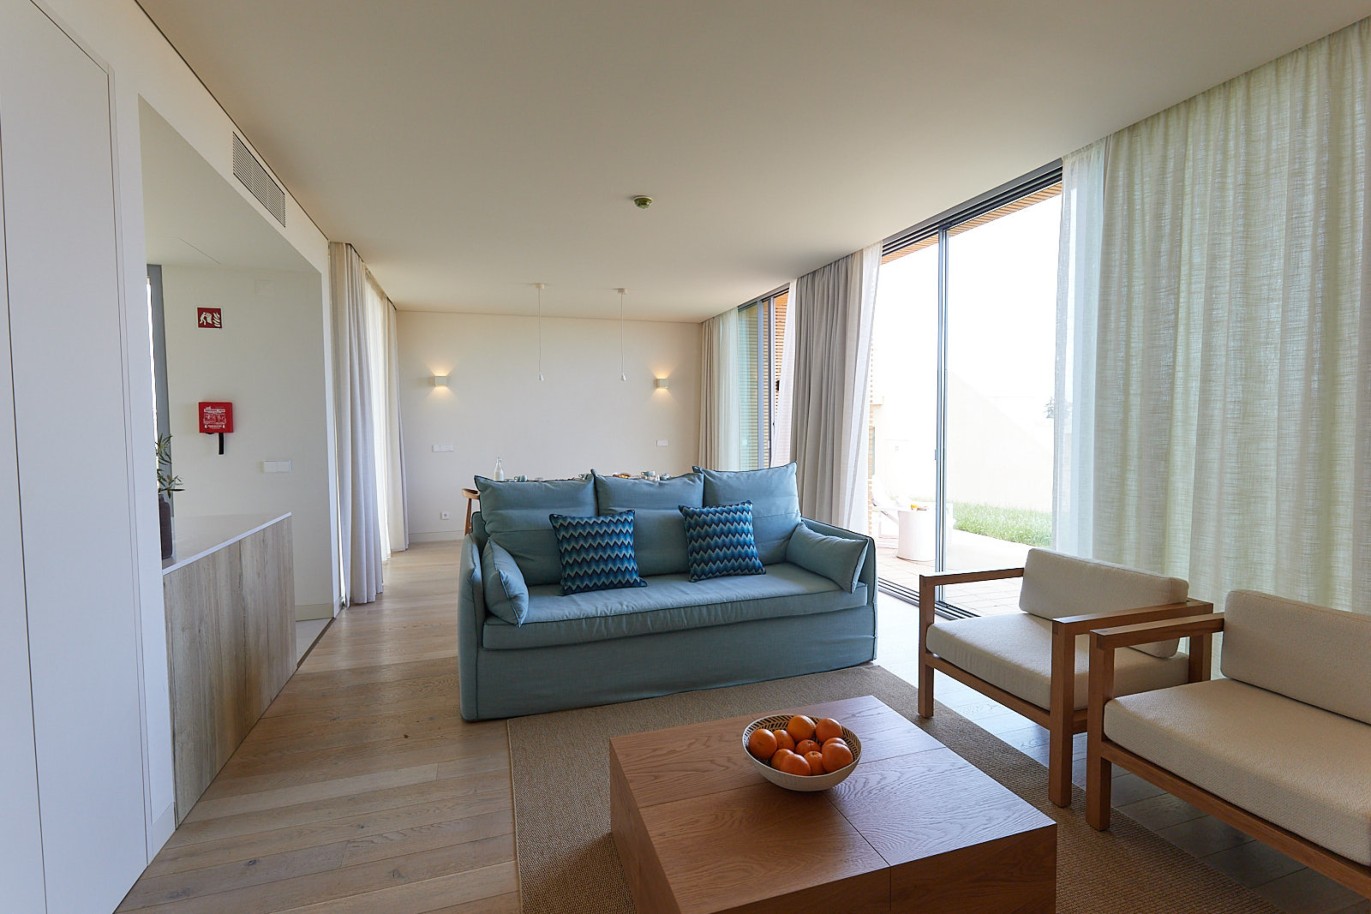 2 bedroom apartment in resort, for sale in Porches, Algarve_230574